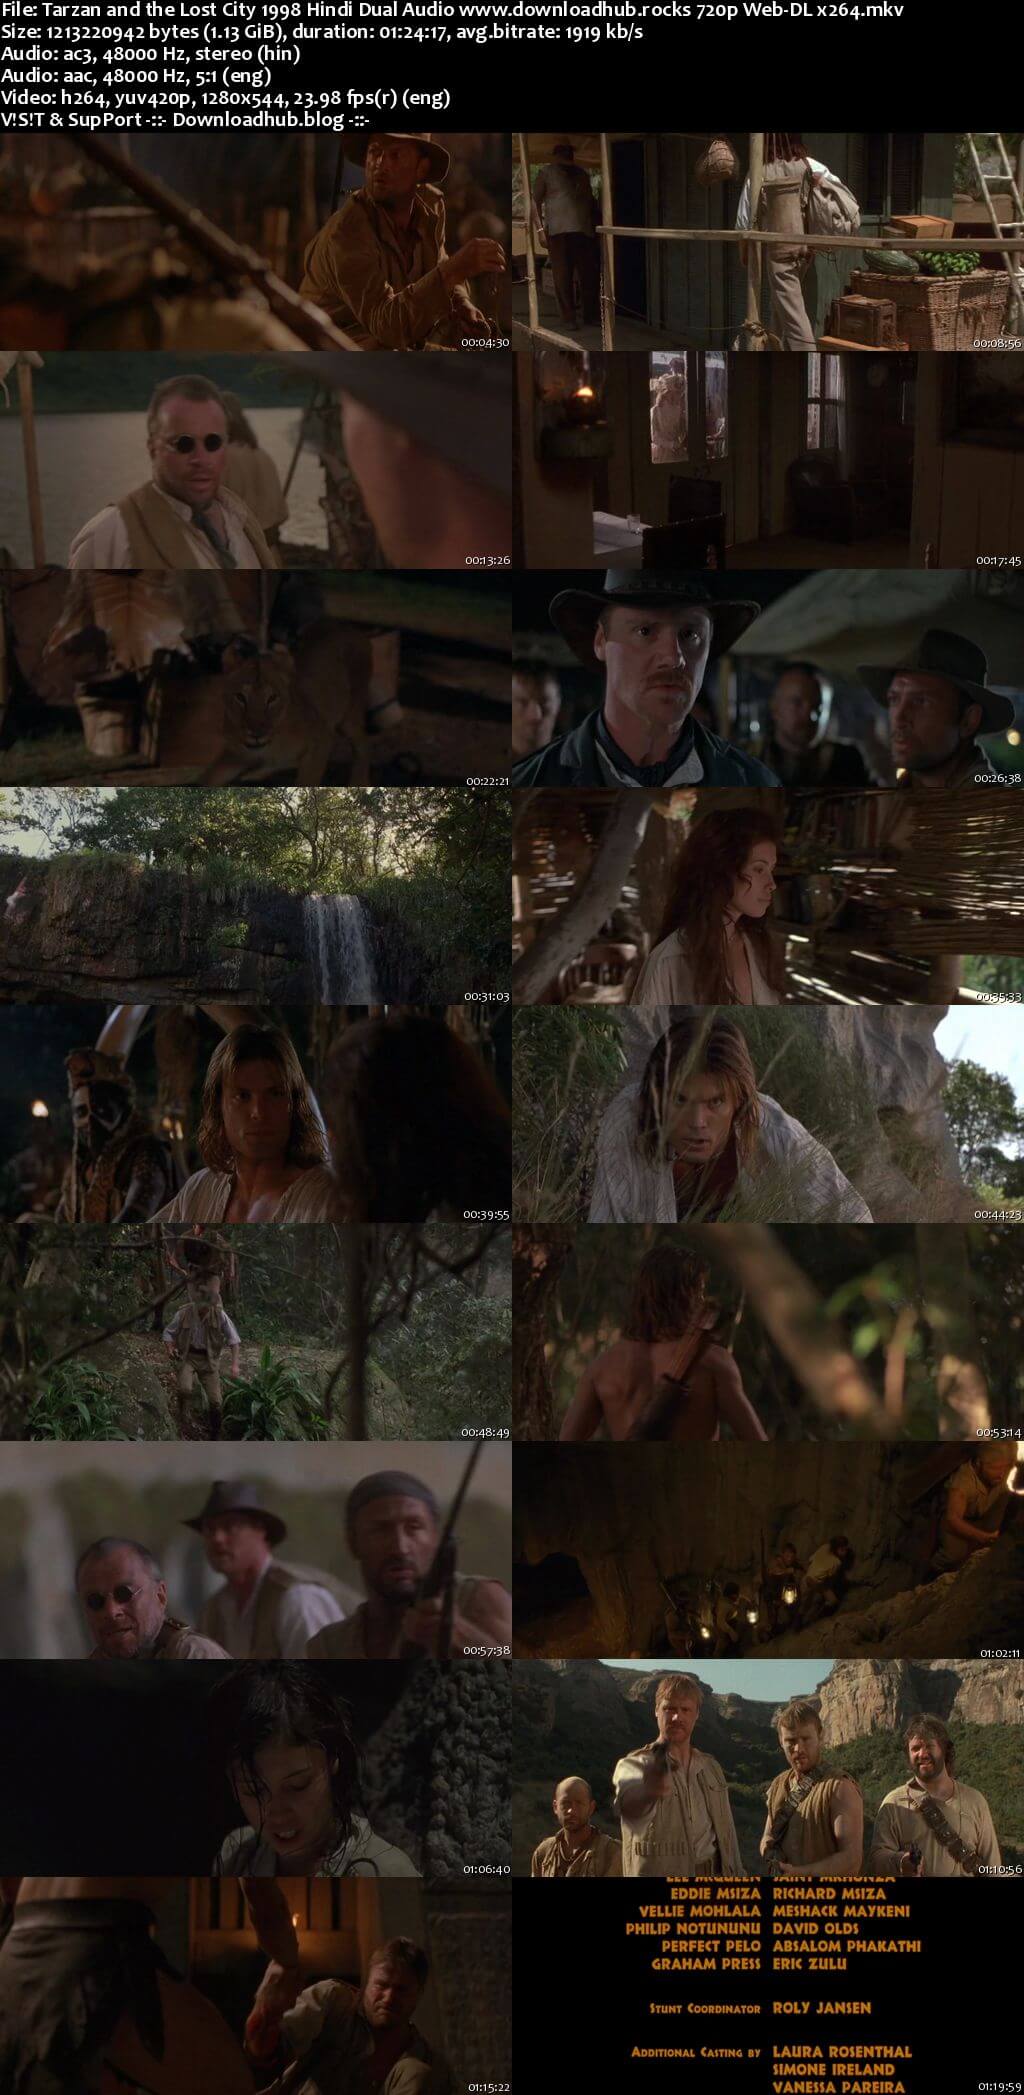 Tarzan and the Lost City 1998 Hindi Dual Audio 720p Web-DL x264